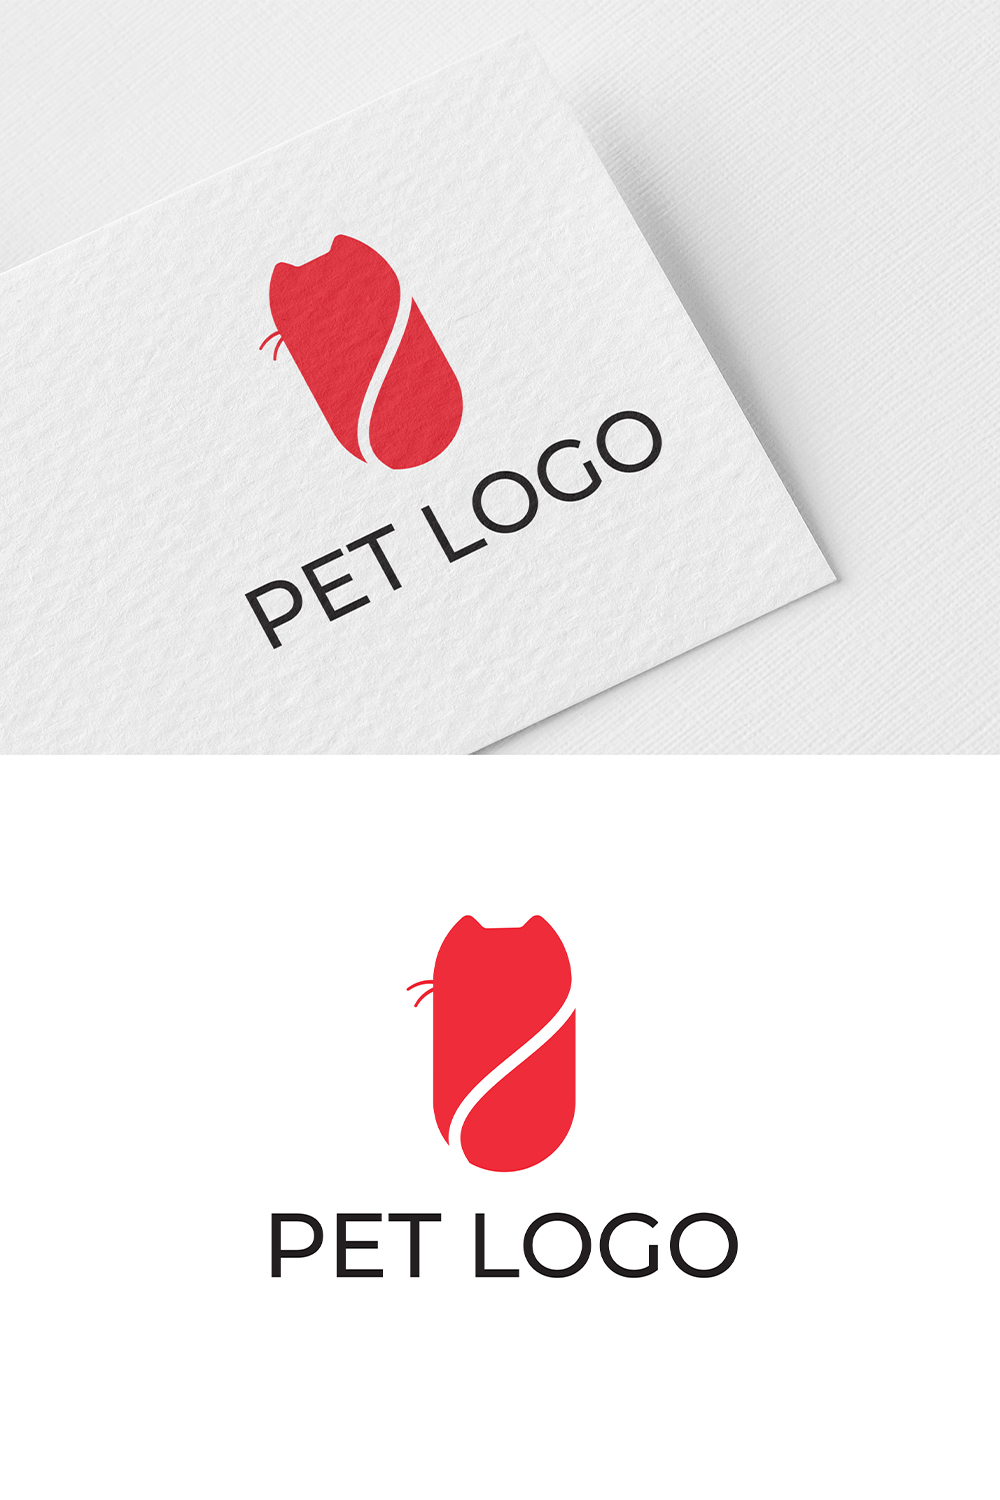 Pet logo pinterest preview image.